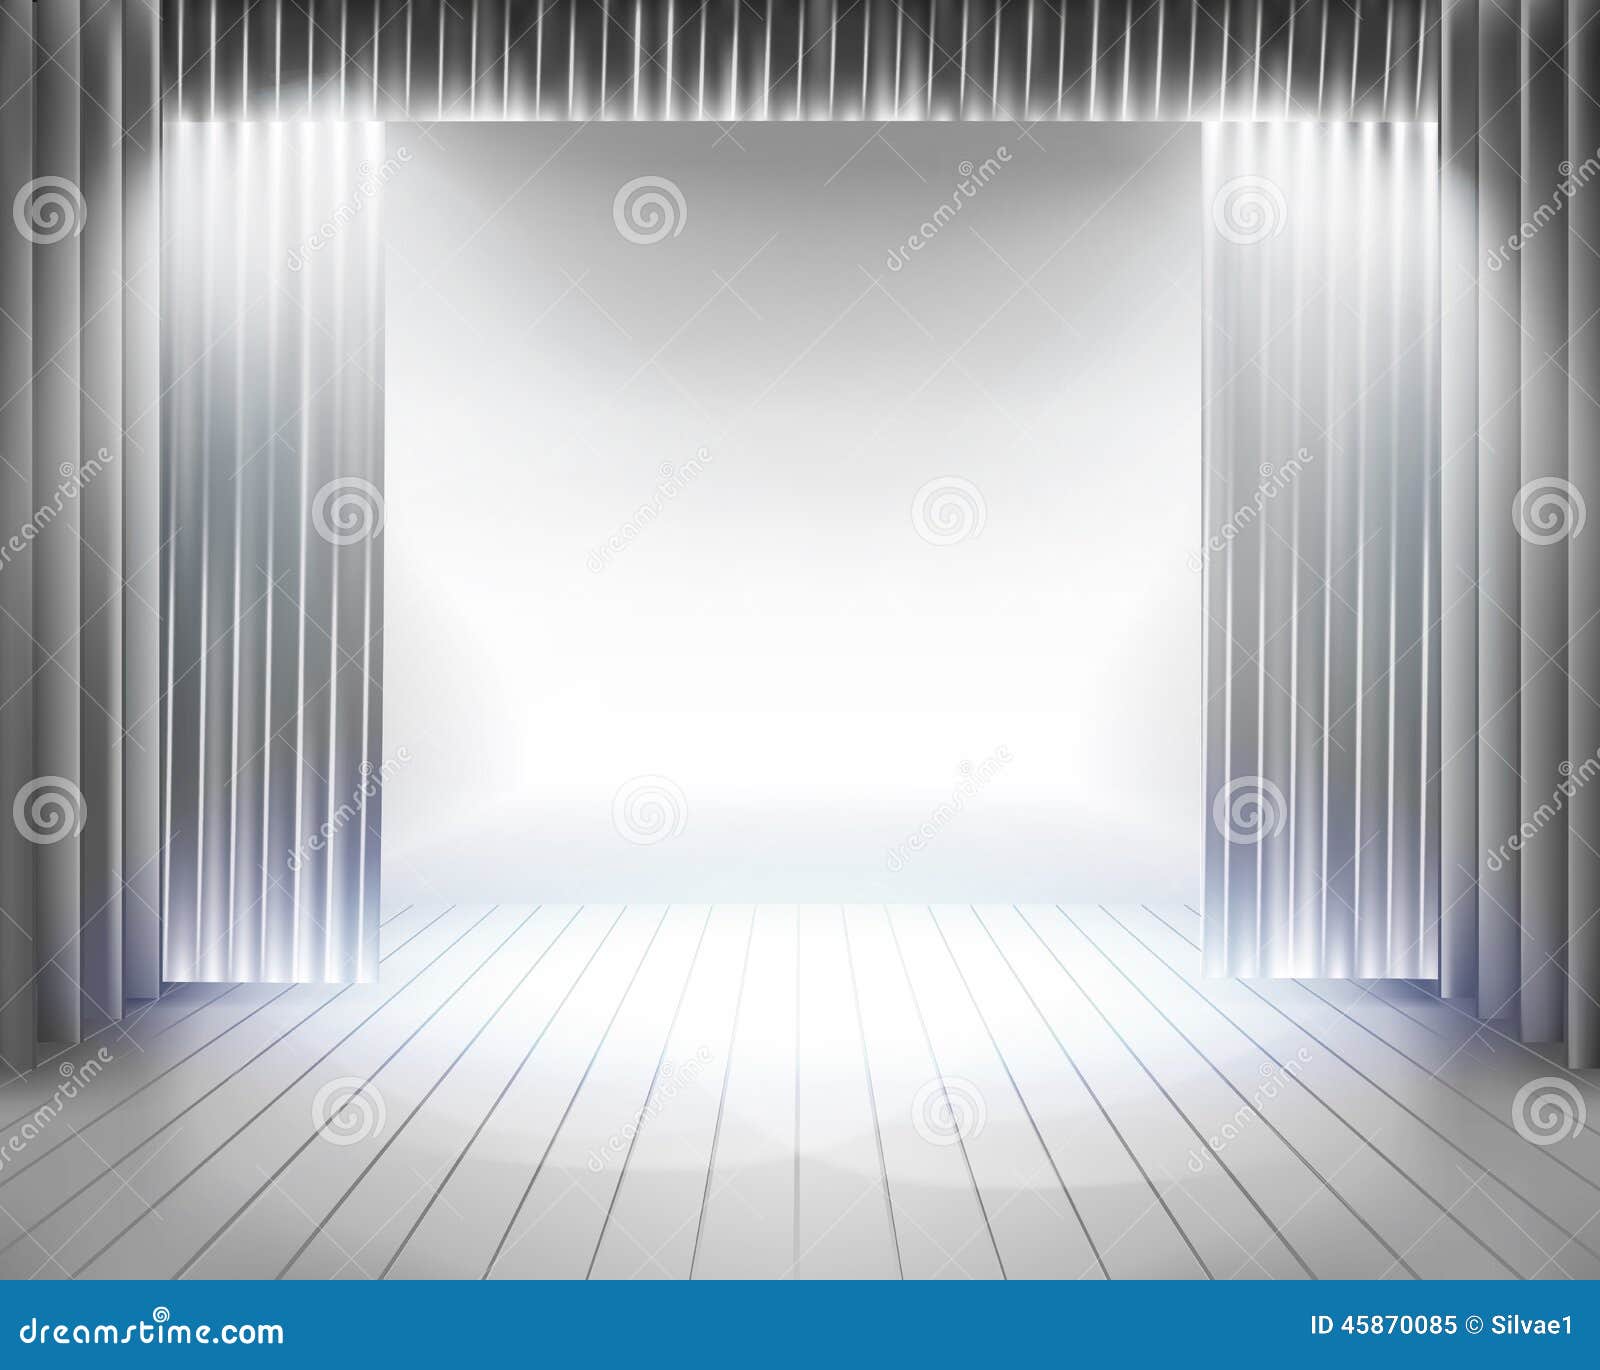 Stage Curtain. Vector Illustration. Stock Vector - Illustration of beam